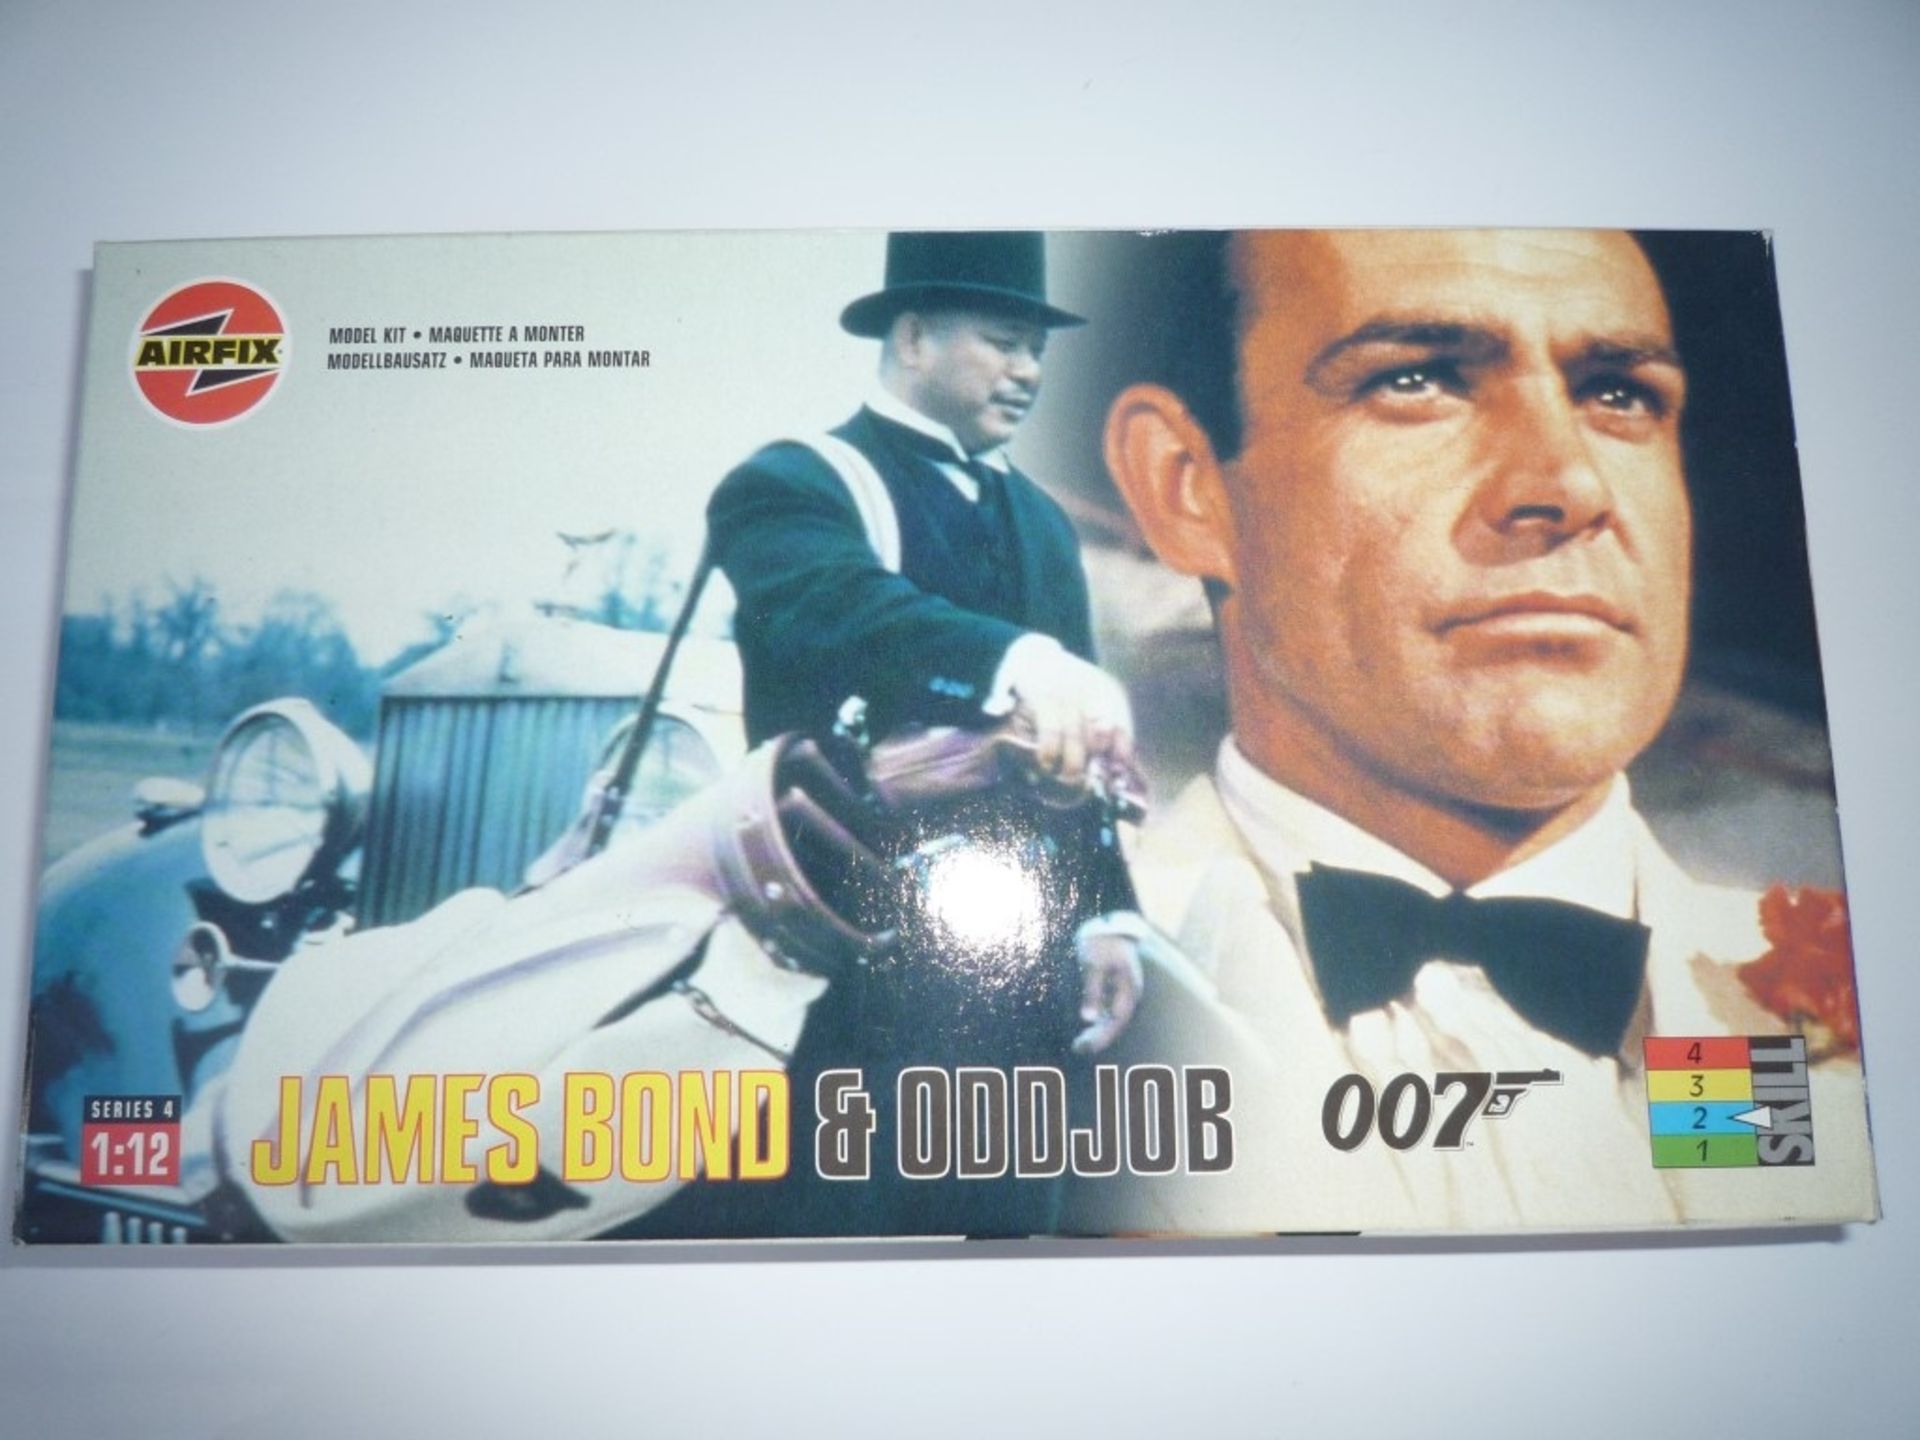 James Bond & Odd Job airfix model kit - Bild 2 aus 2